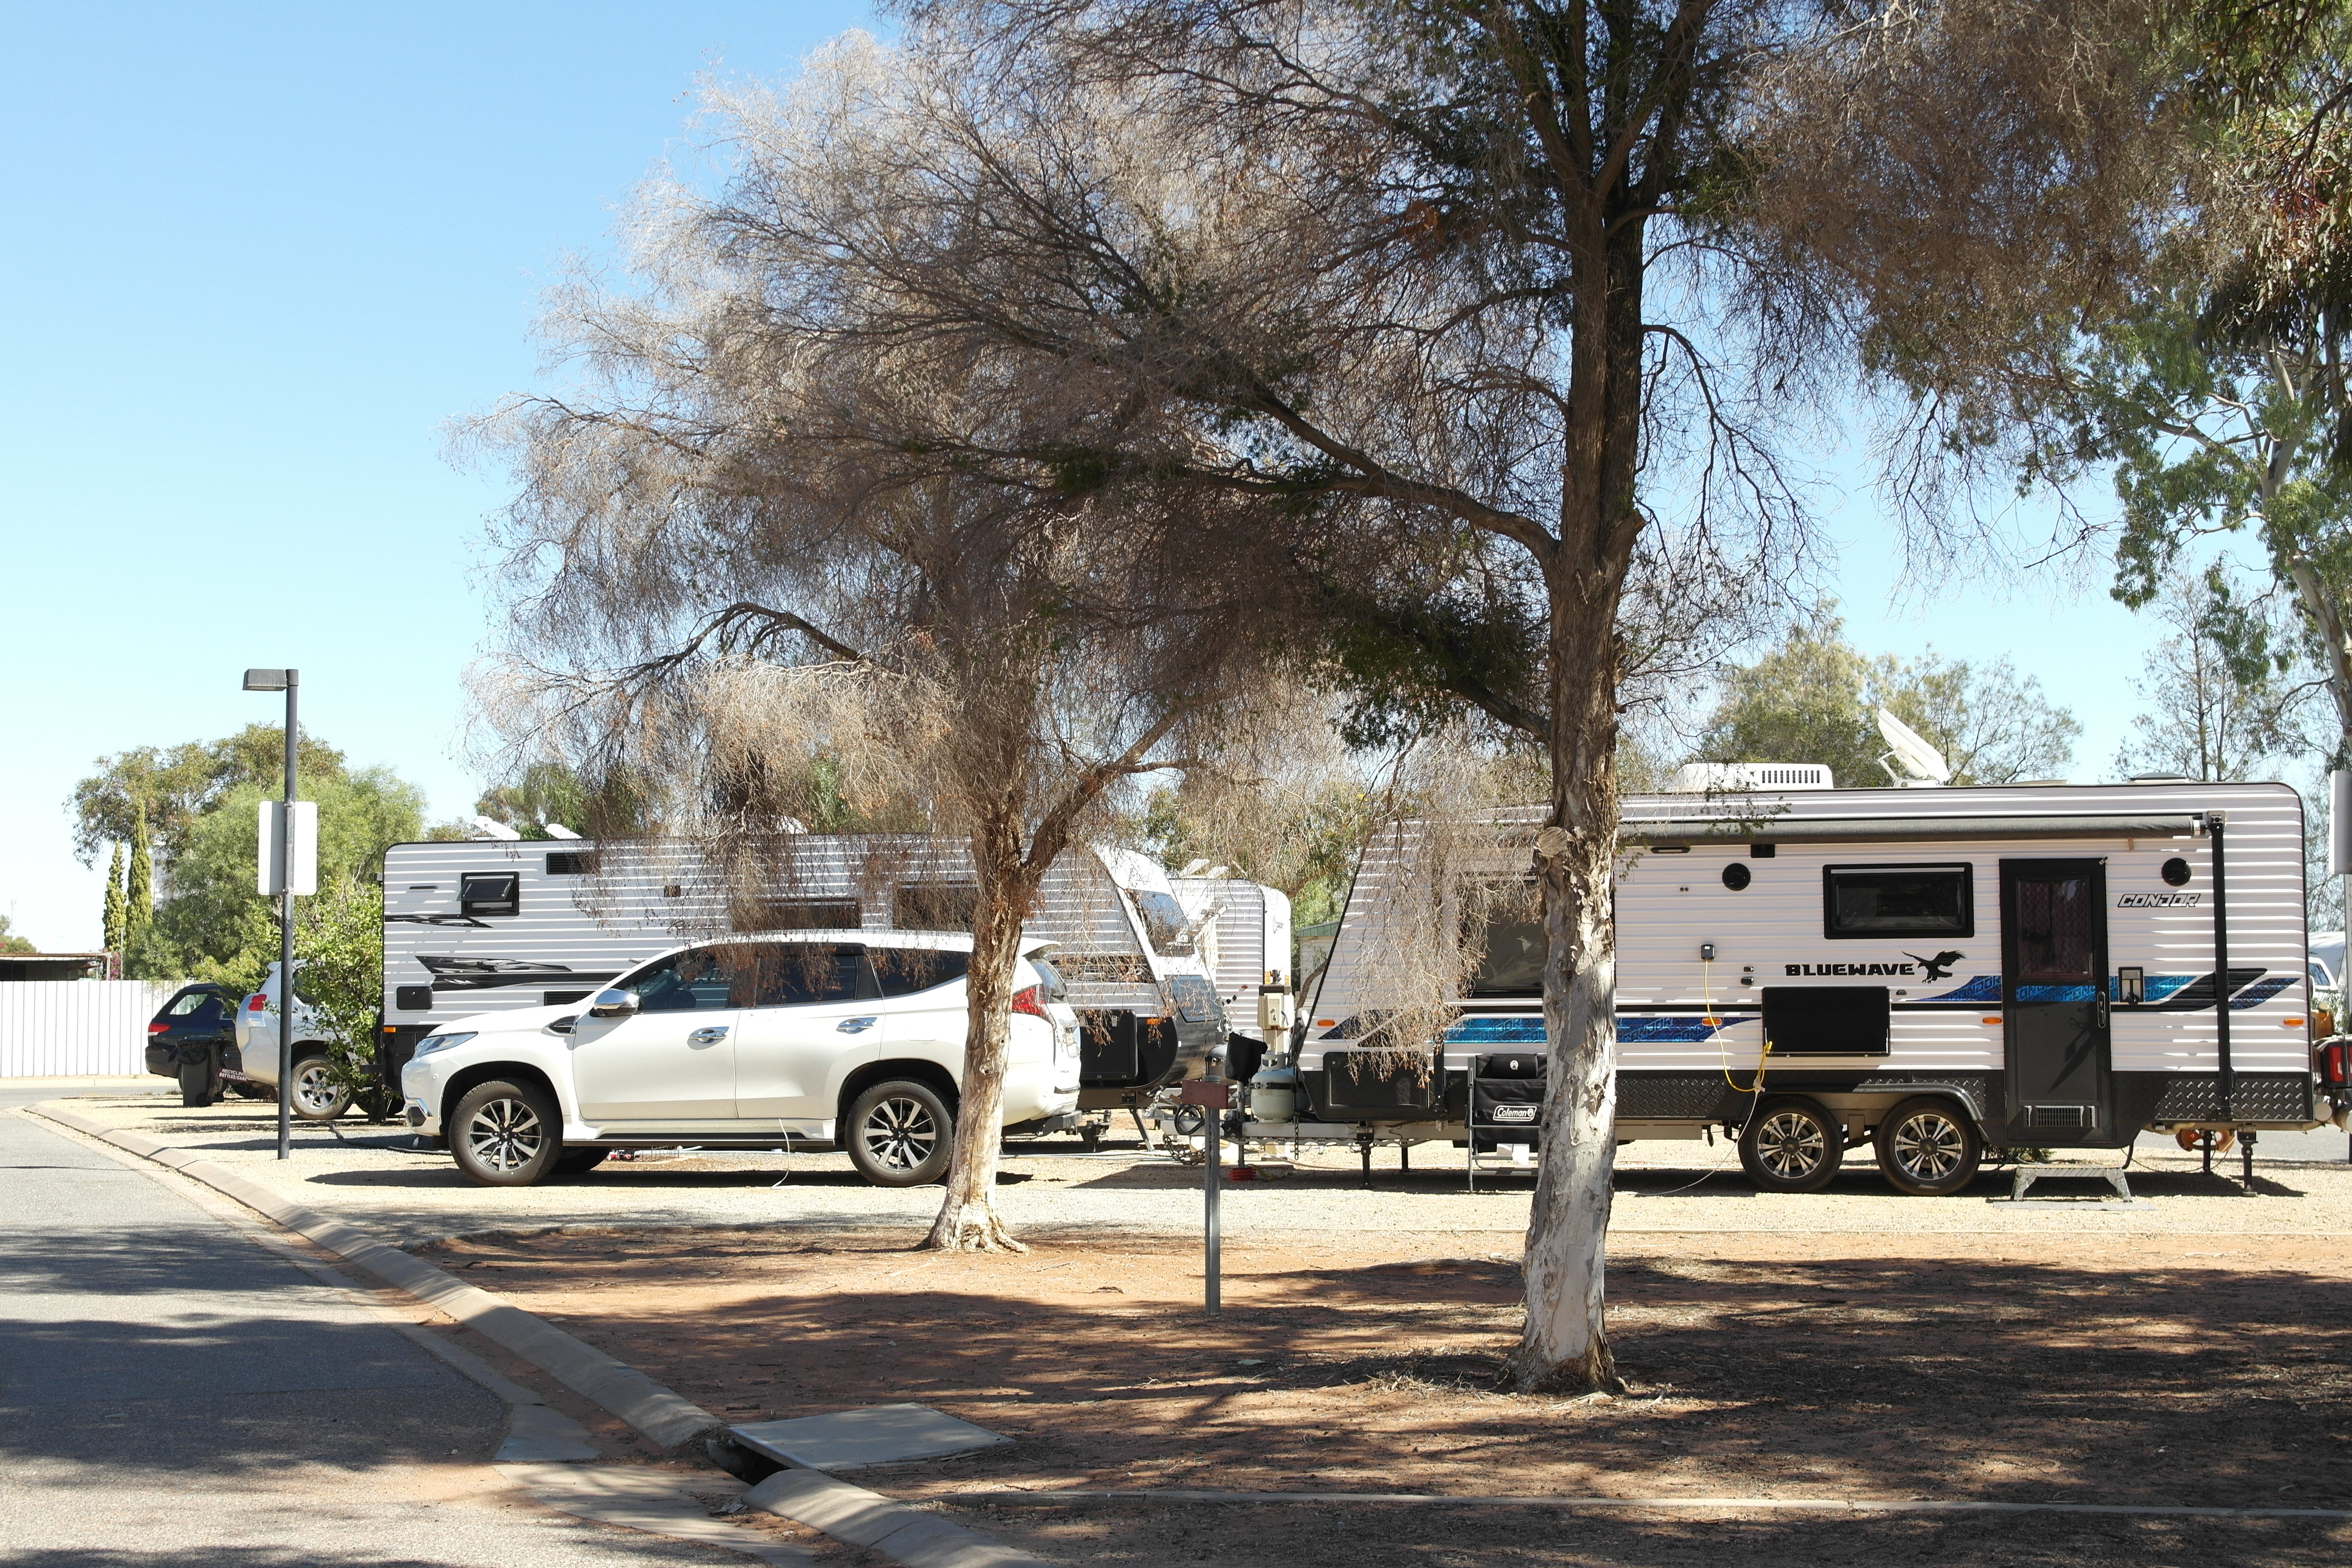 Group of caravan's camped at powered sites